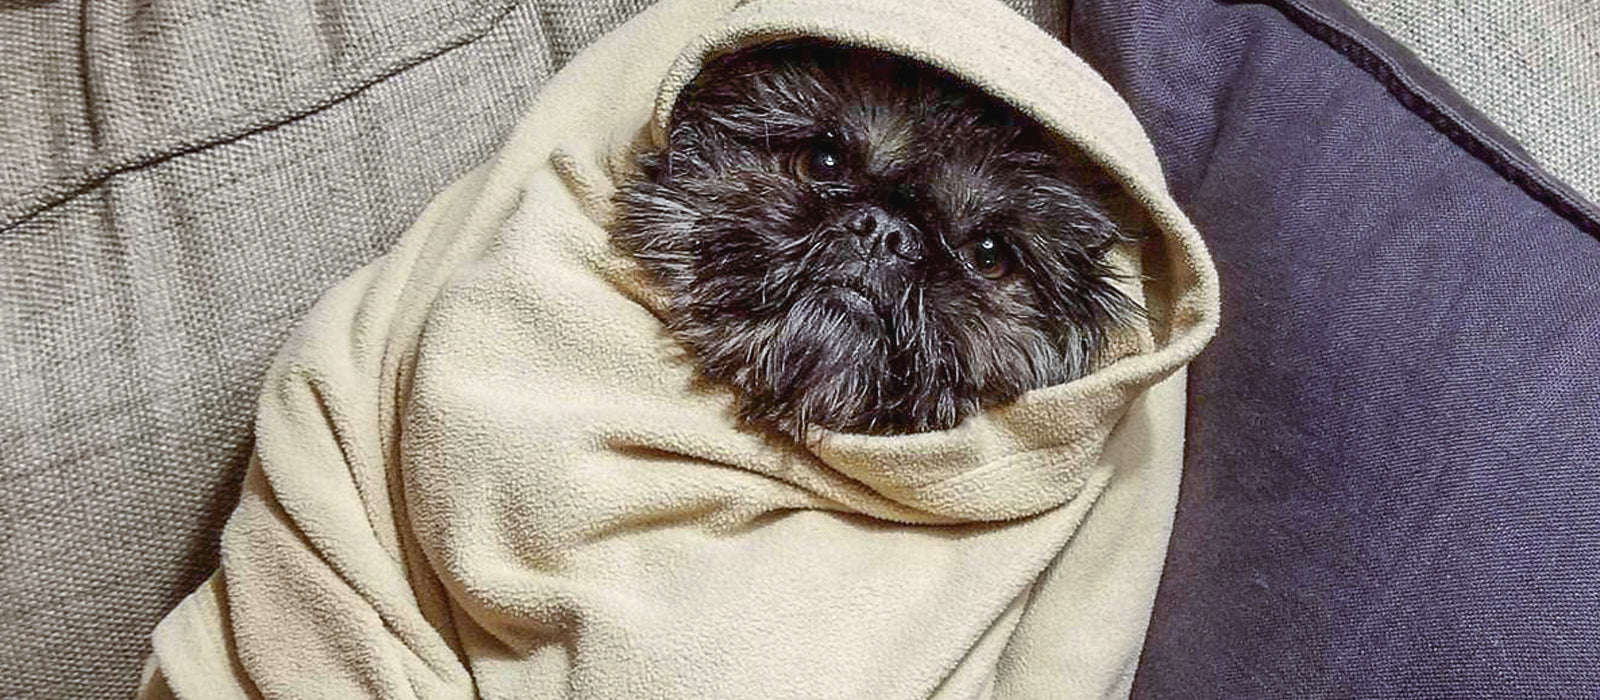 Seven Funniest Dogs in a Blanket